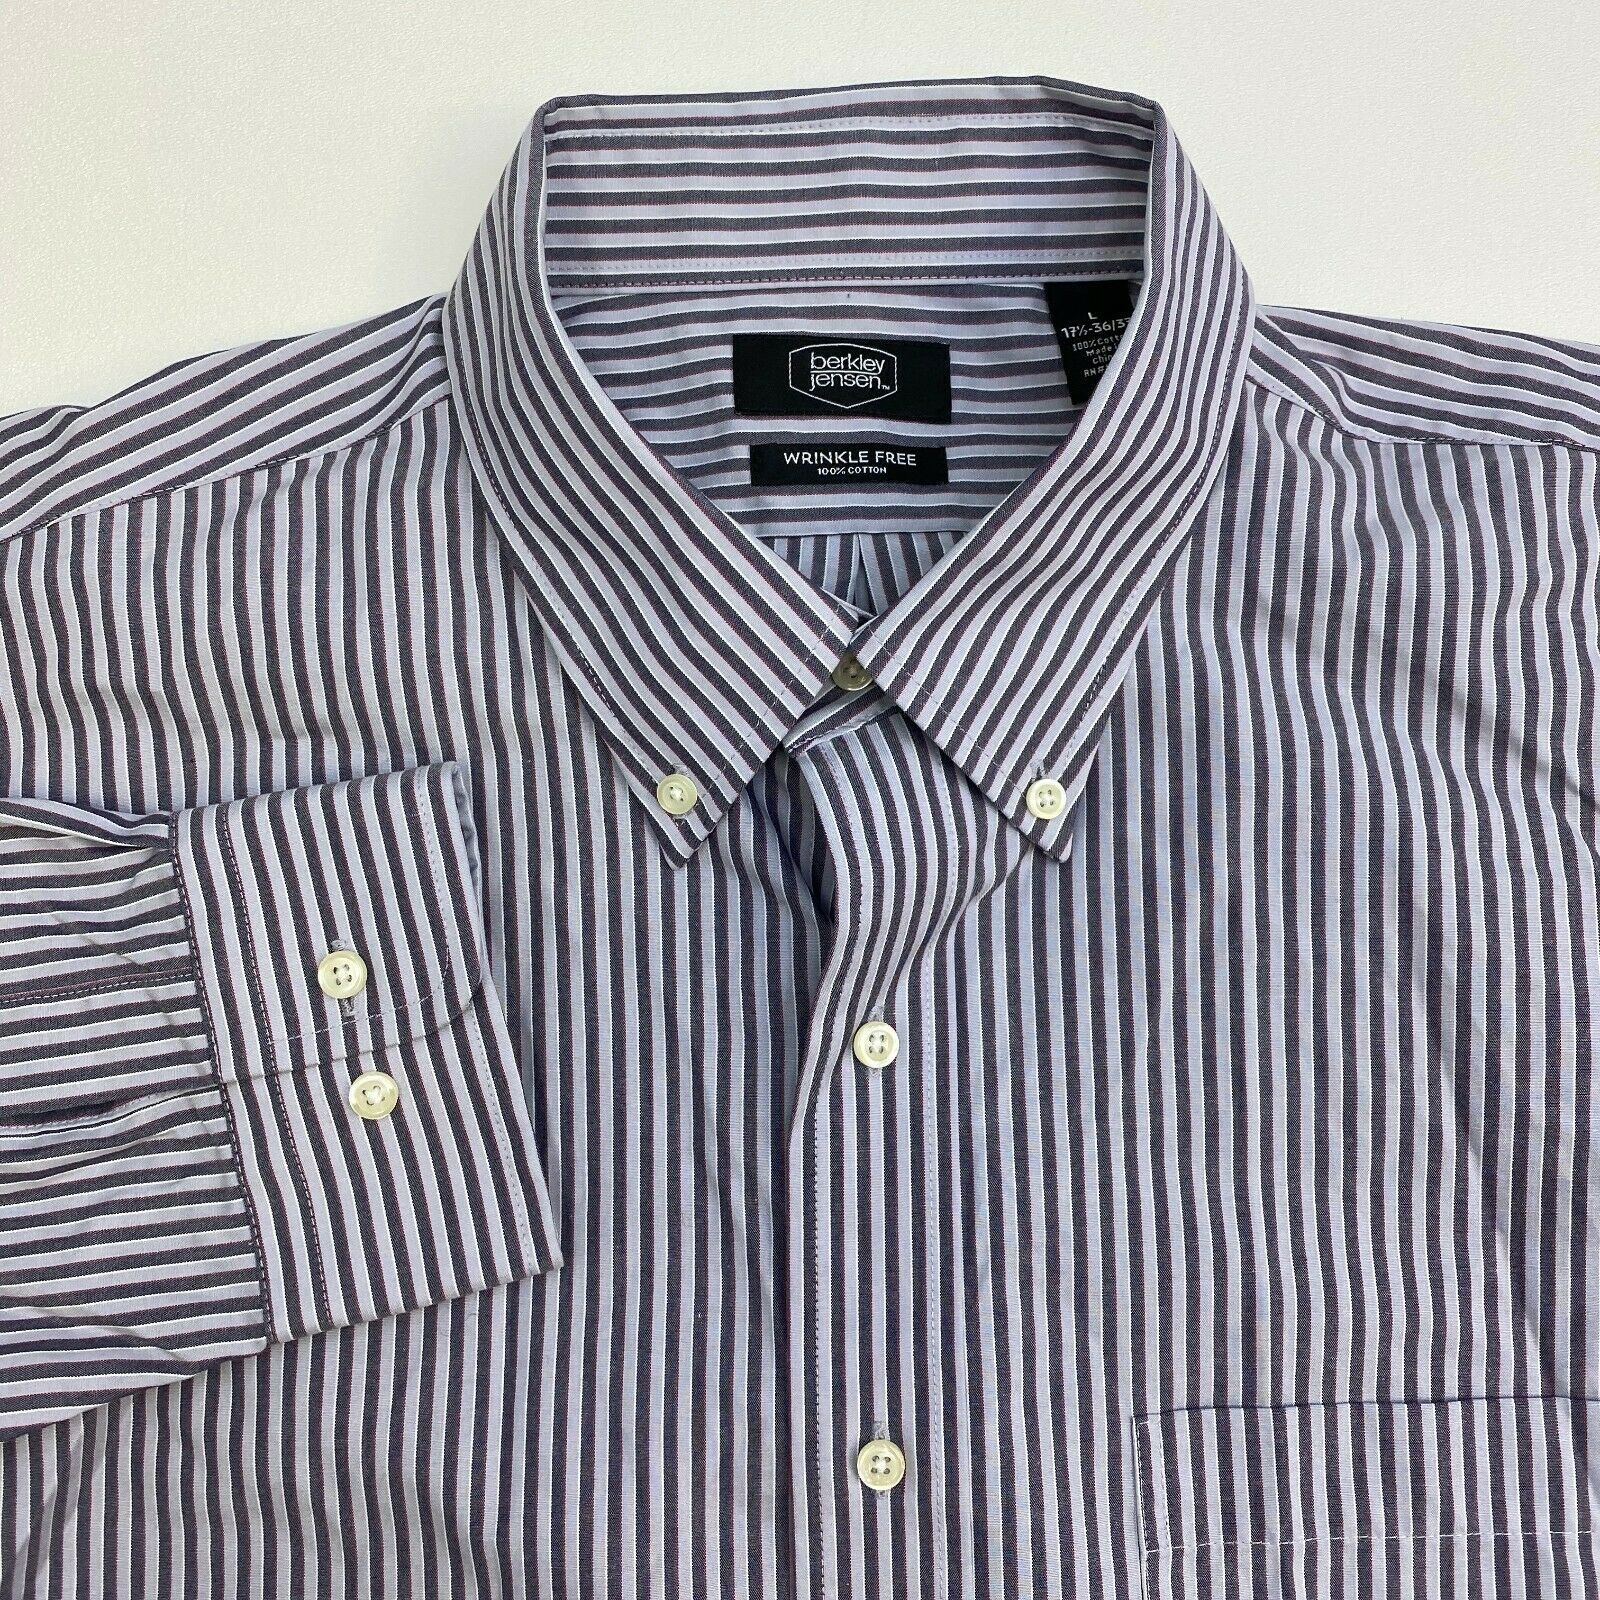 Berkley Jensen Button Up Shirt Mens Large Wrinkle Free Gray Stripe Long ...